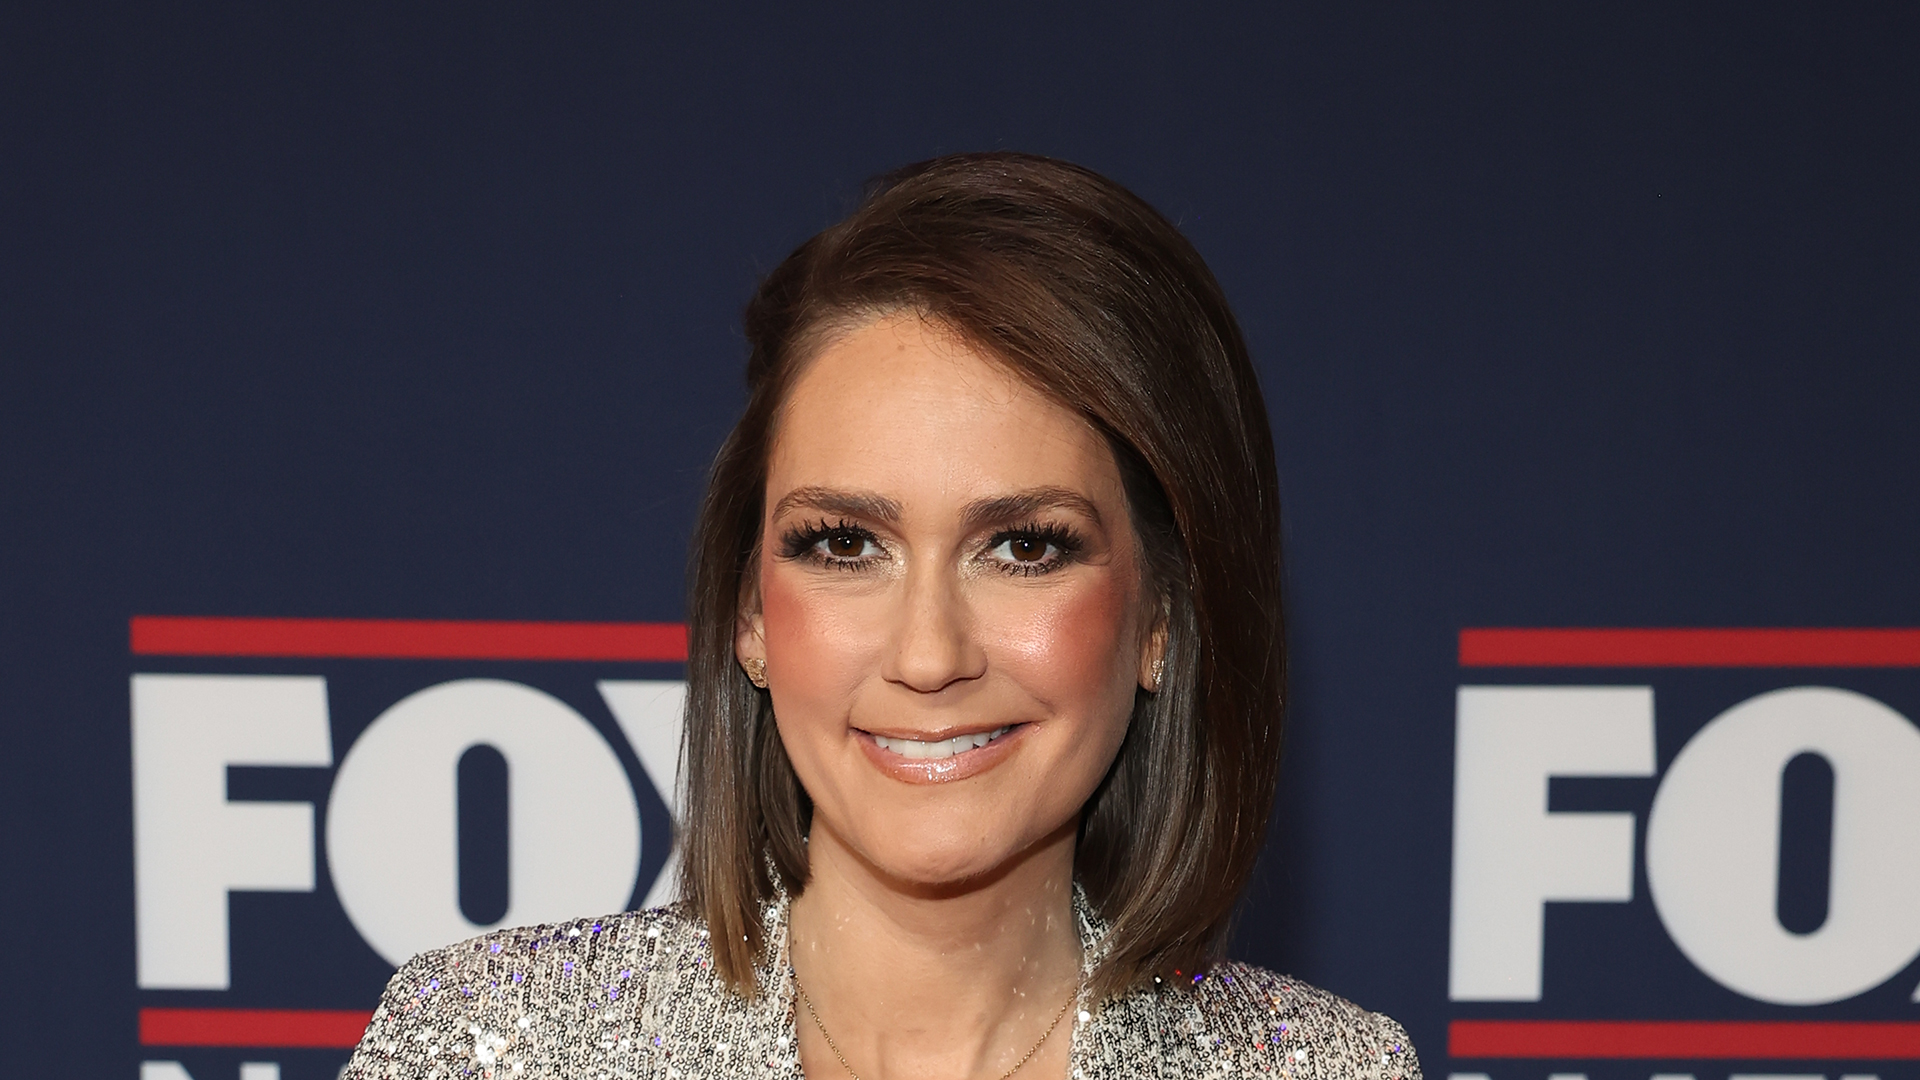 Fox News' Jessica Tarlov reveals she's expecting her second baby